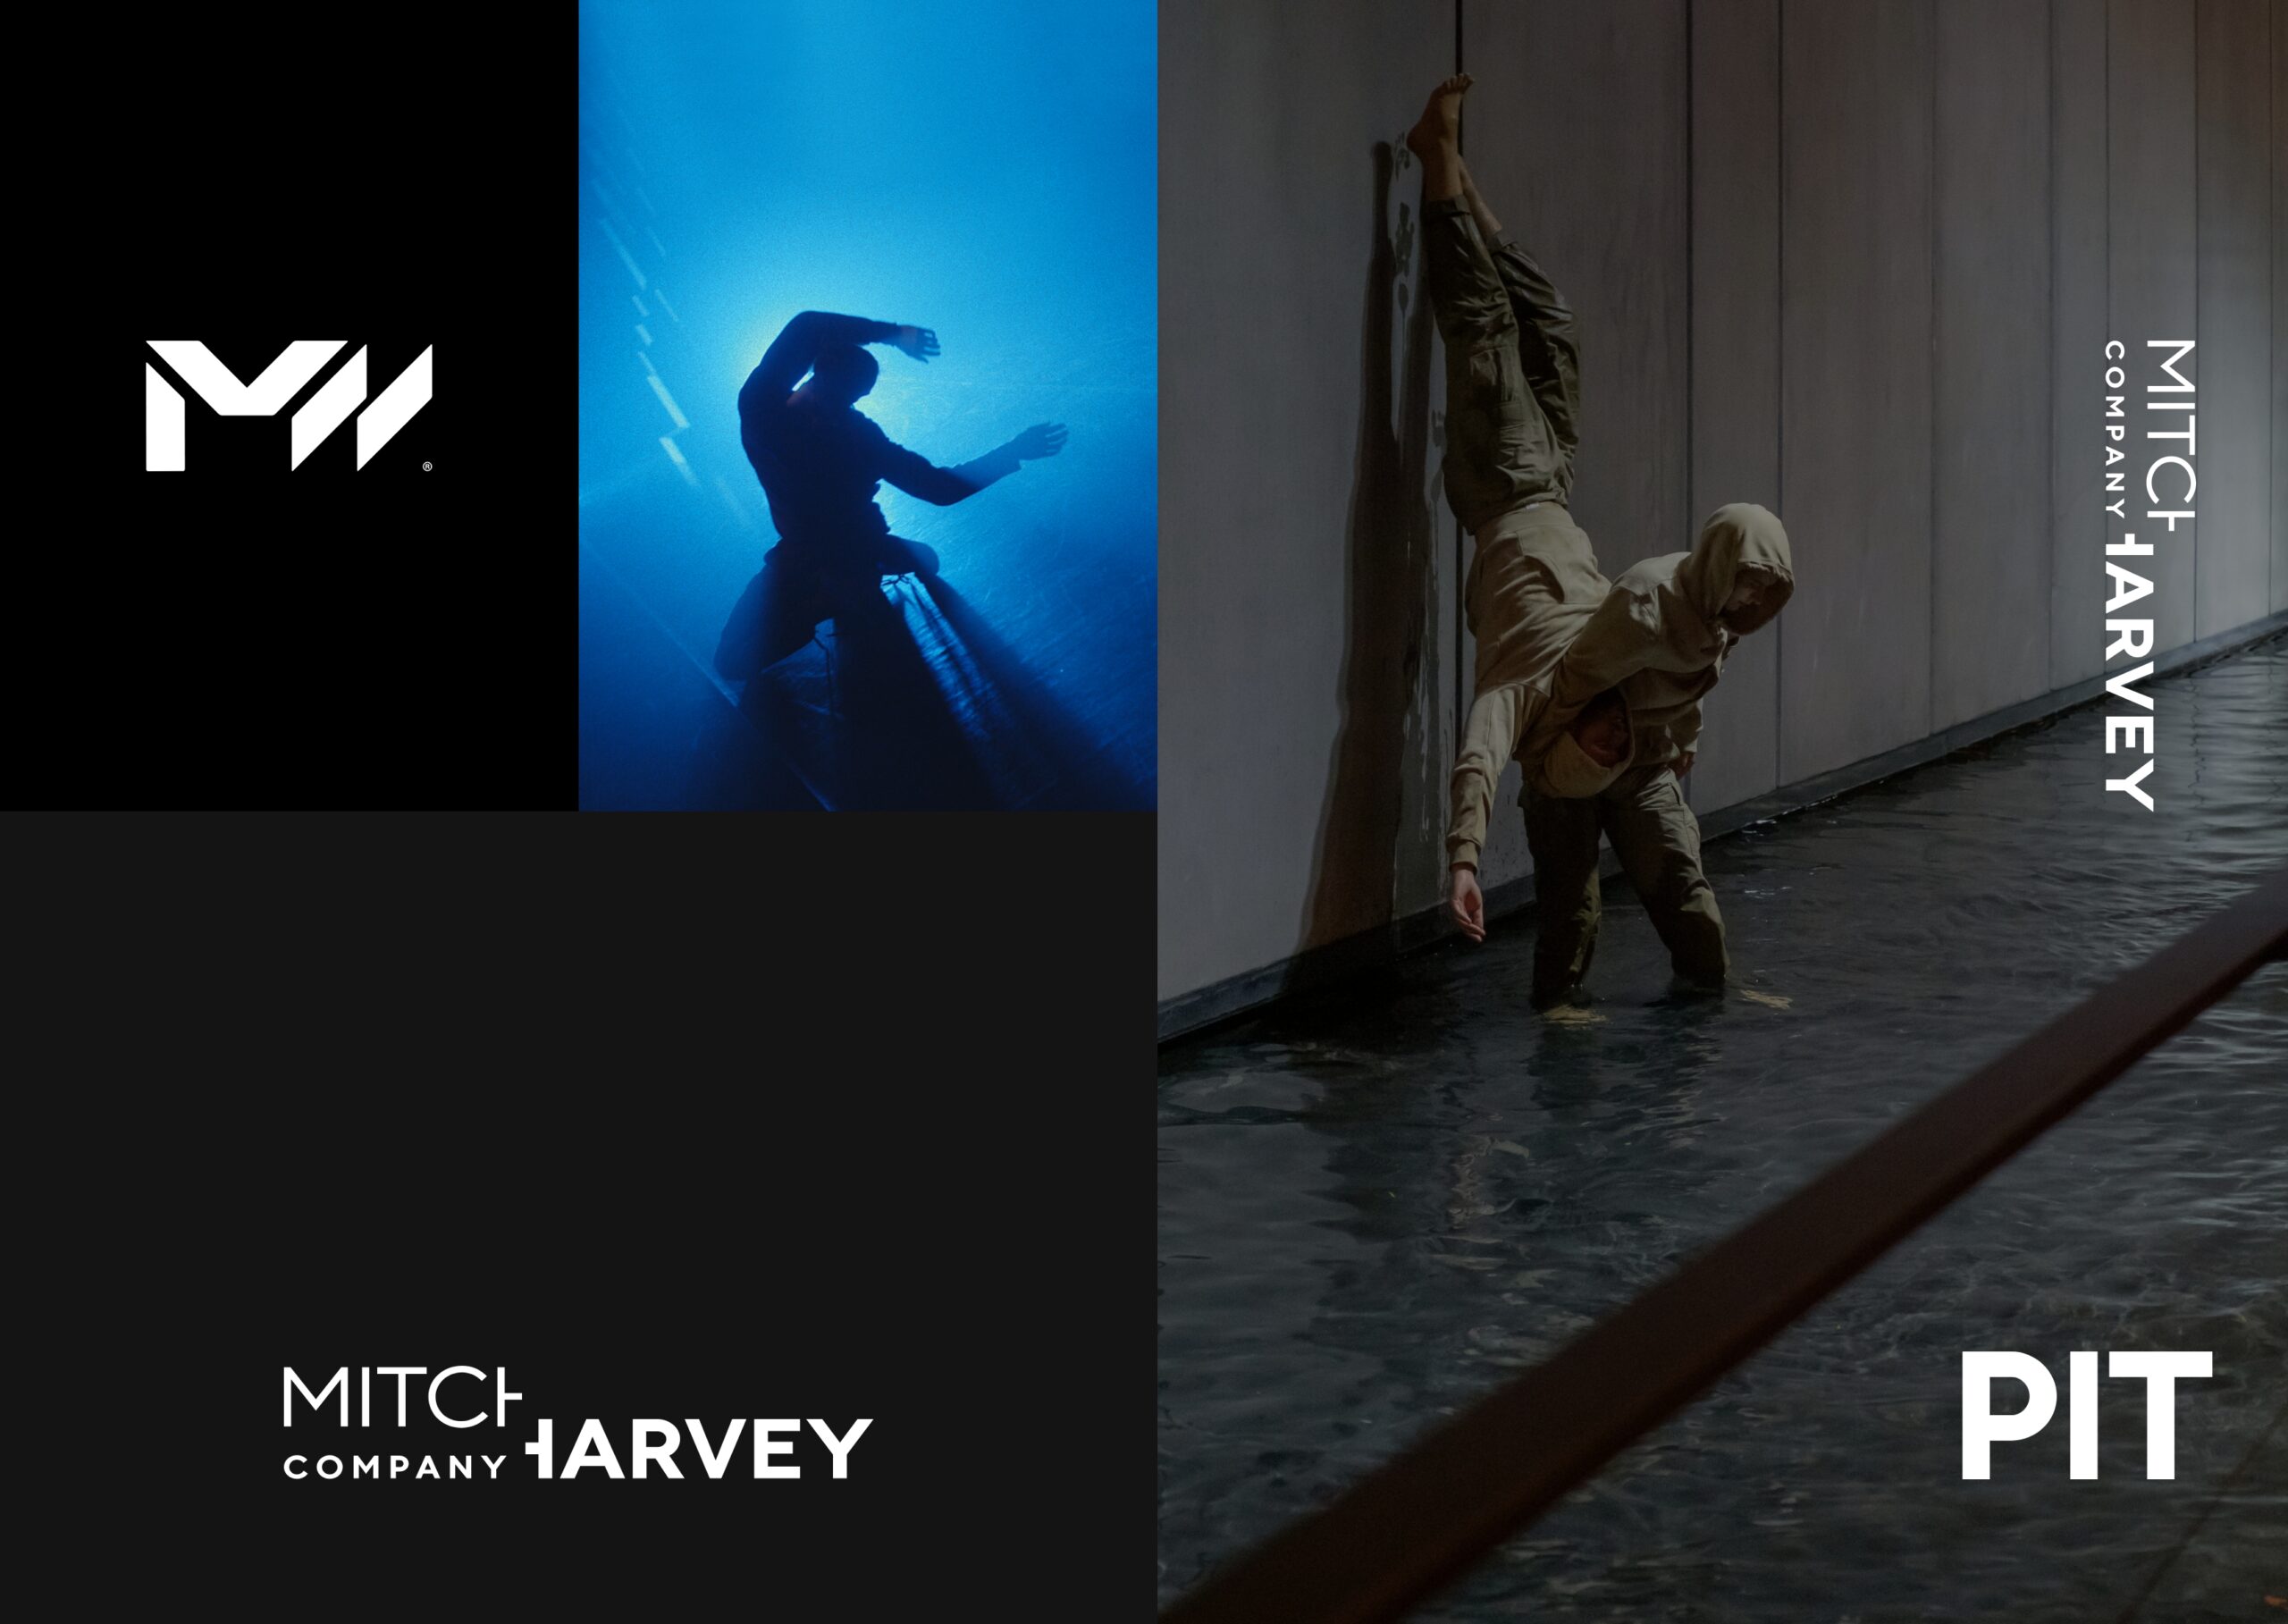 Mitch Harvey Contemporary Dance: Branding Design Development by TL Design Co.